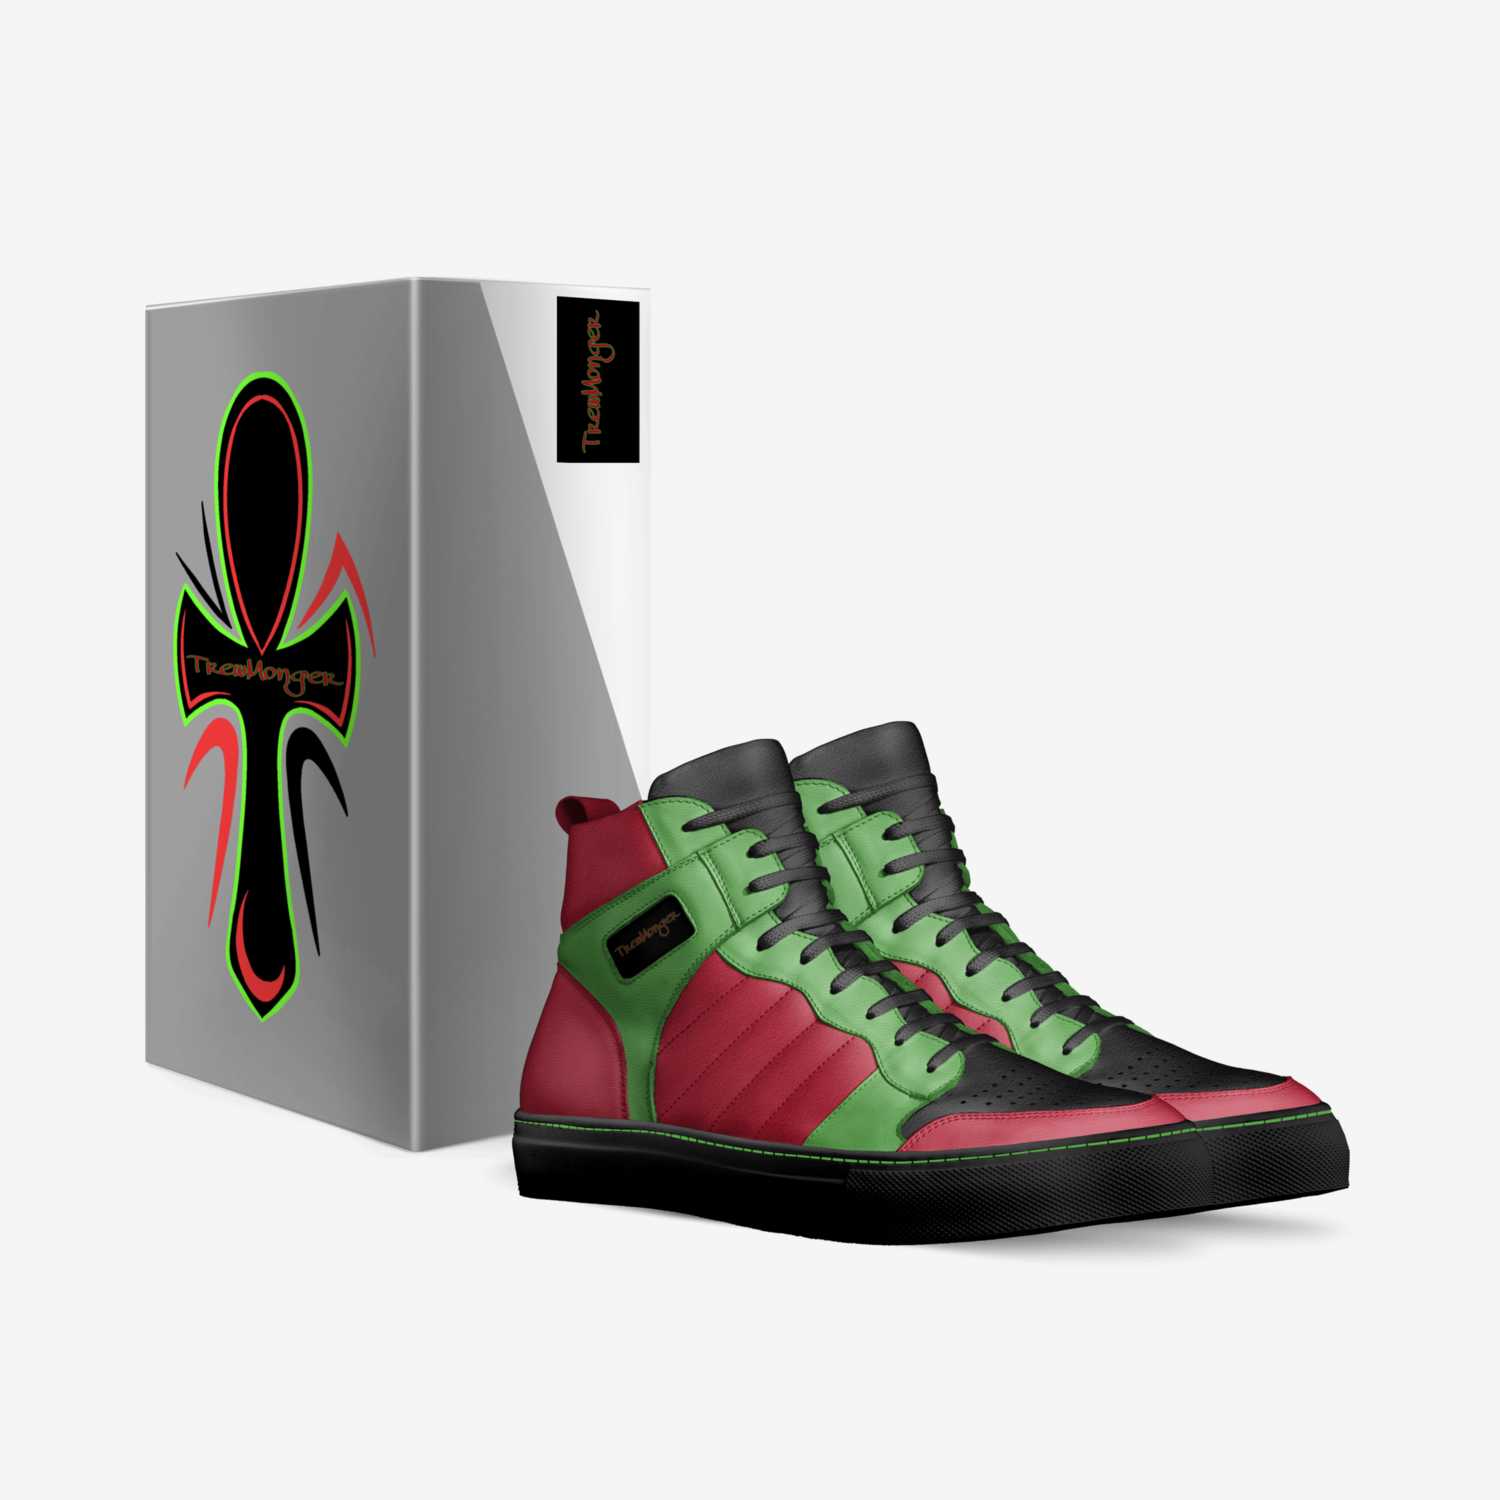 RBG Retro custom made in Italy shoes by TrewMonger Brand | Box view